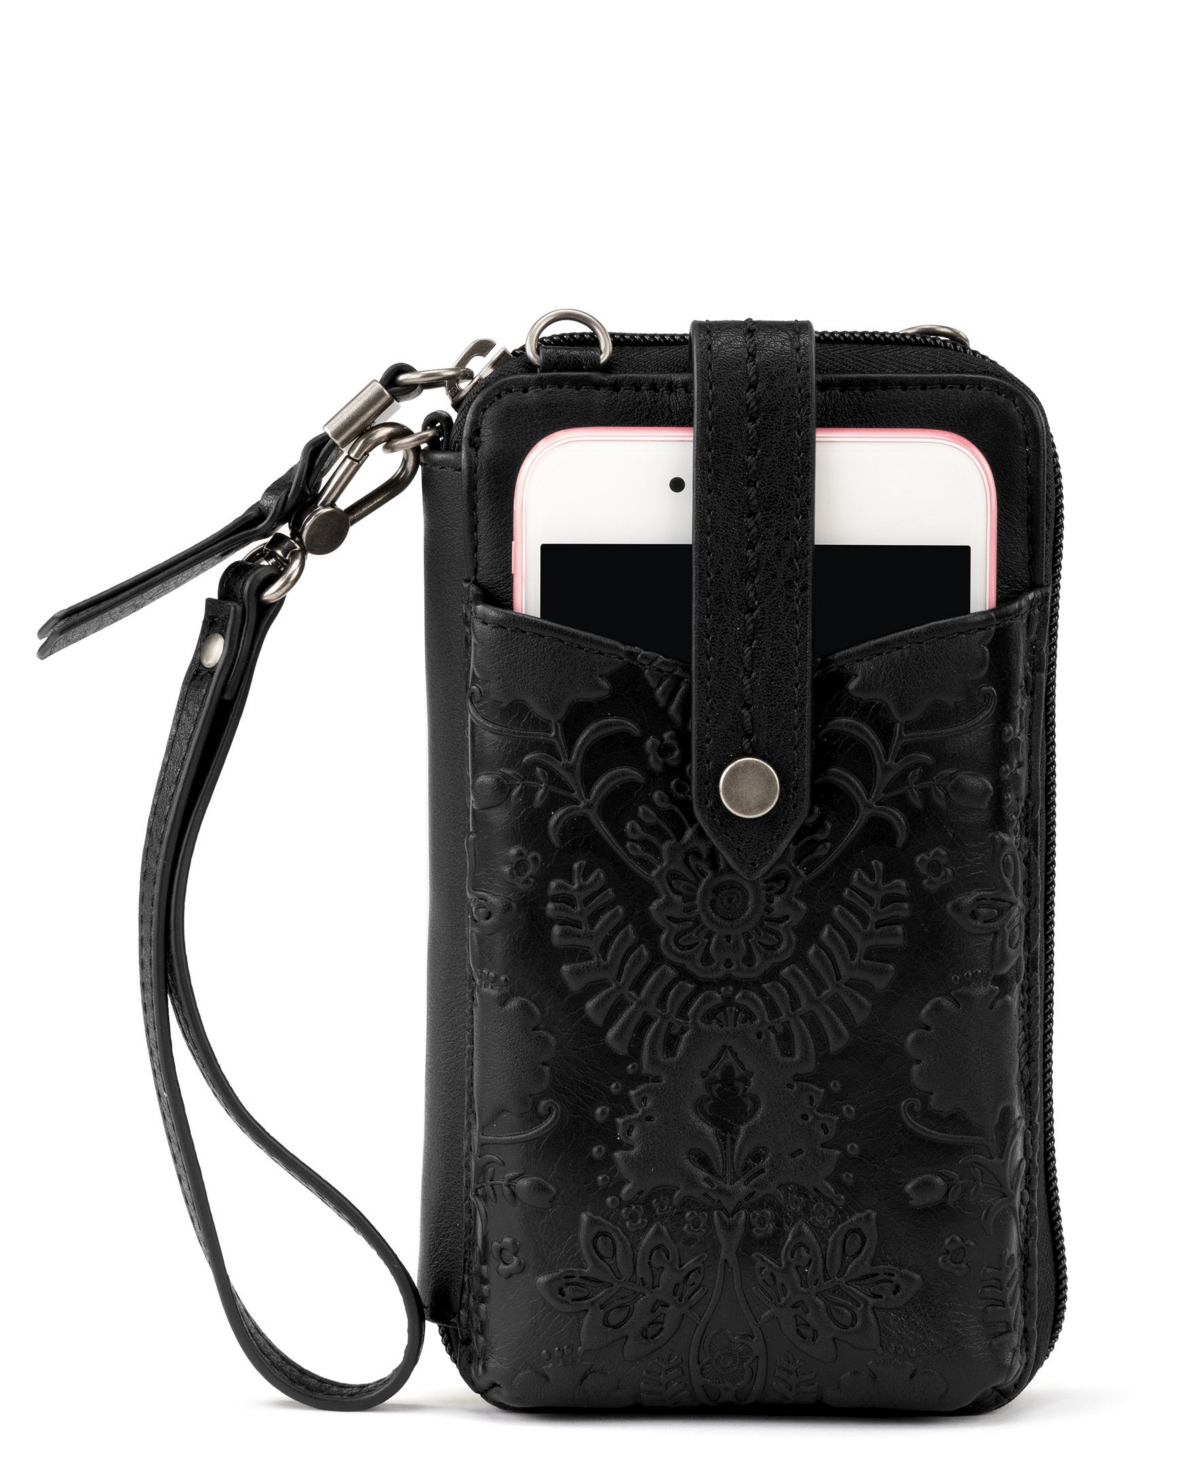 The Sak Women's Silverlake Smartphone Crossbody Handbag In Black Floral Embossed